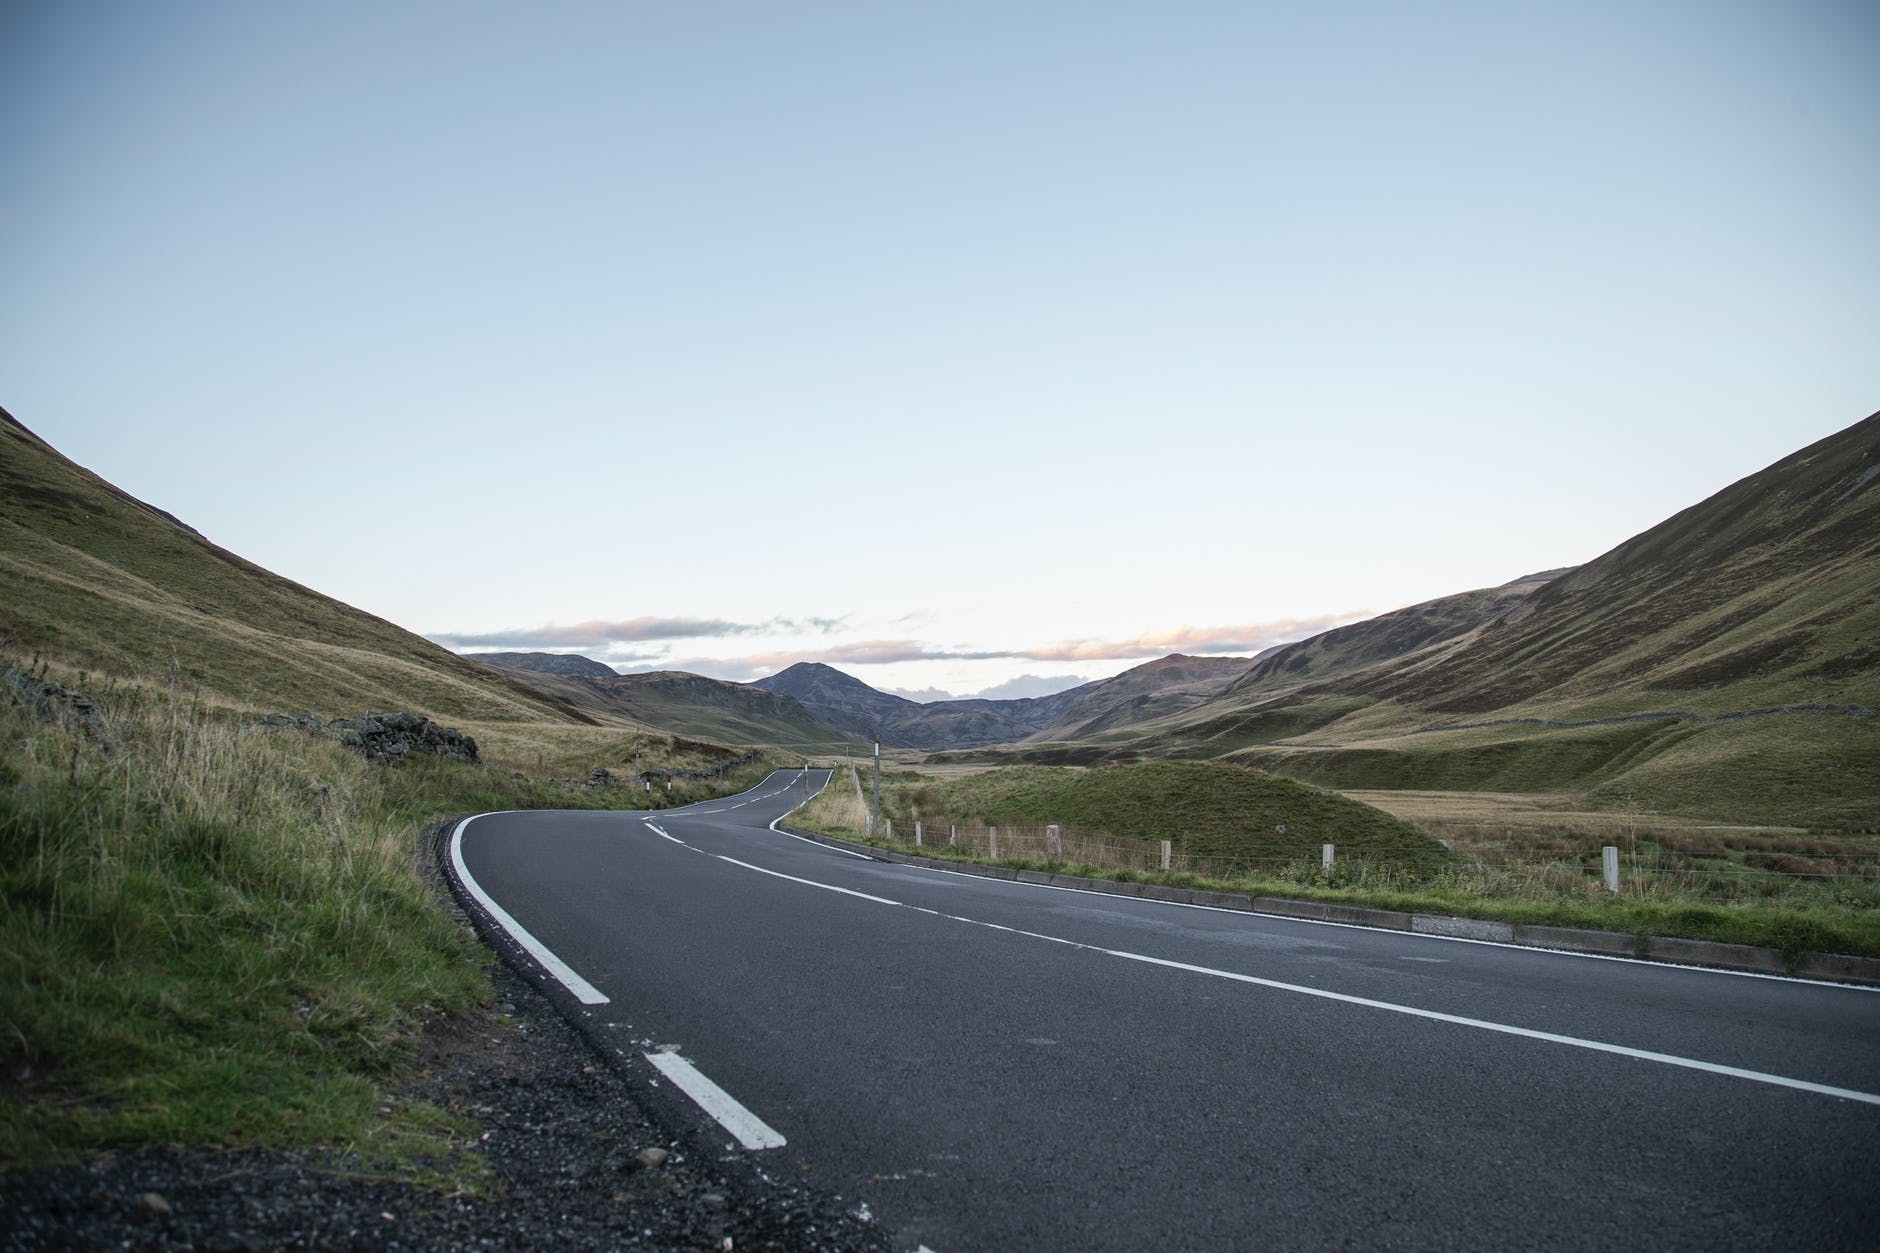 asphalt road through hilly terrain to mountain